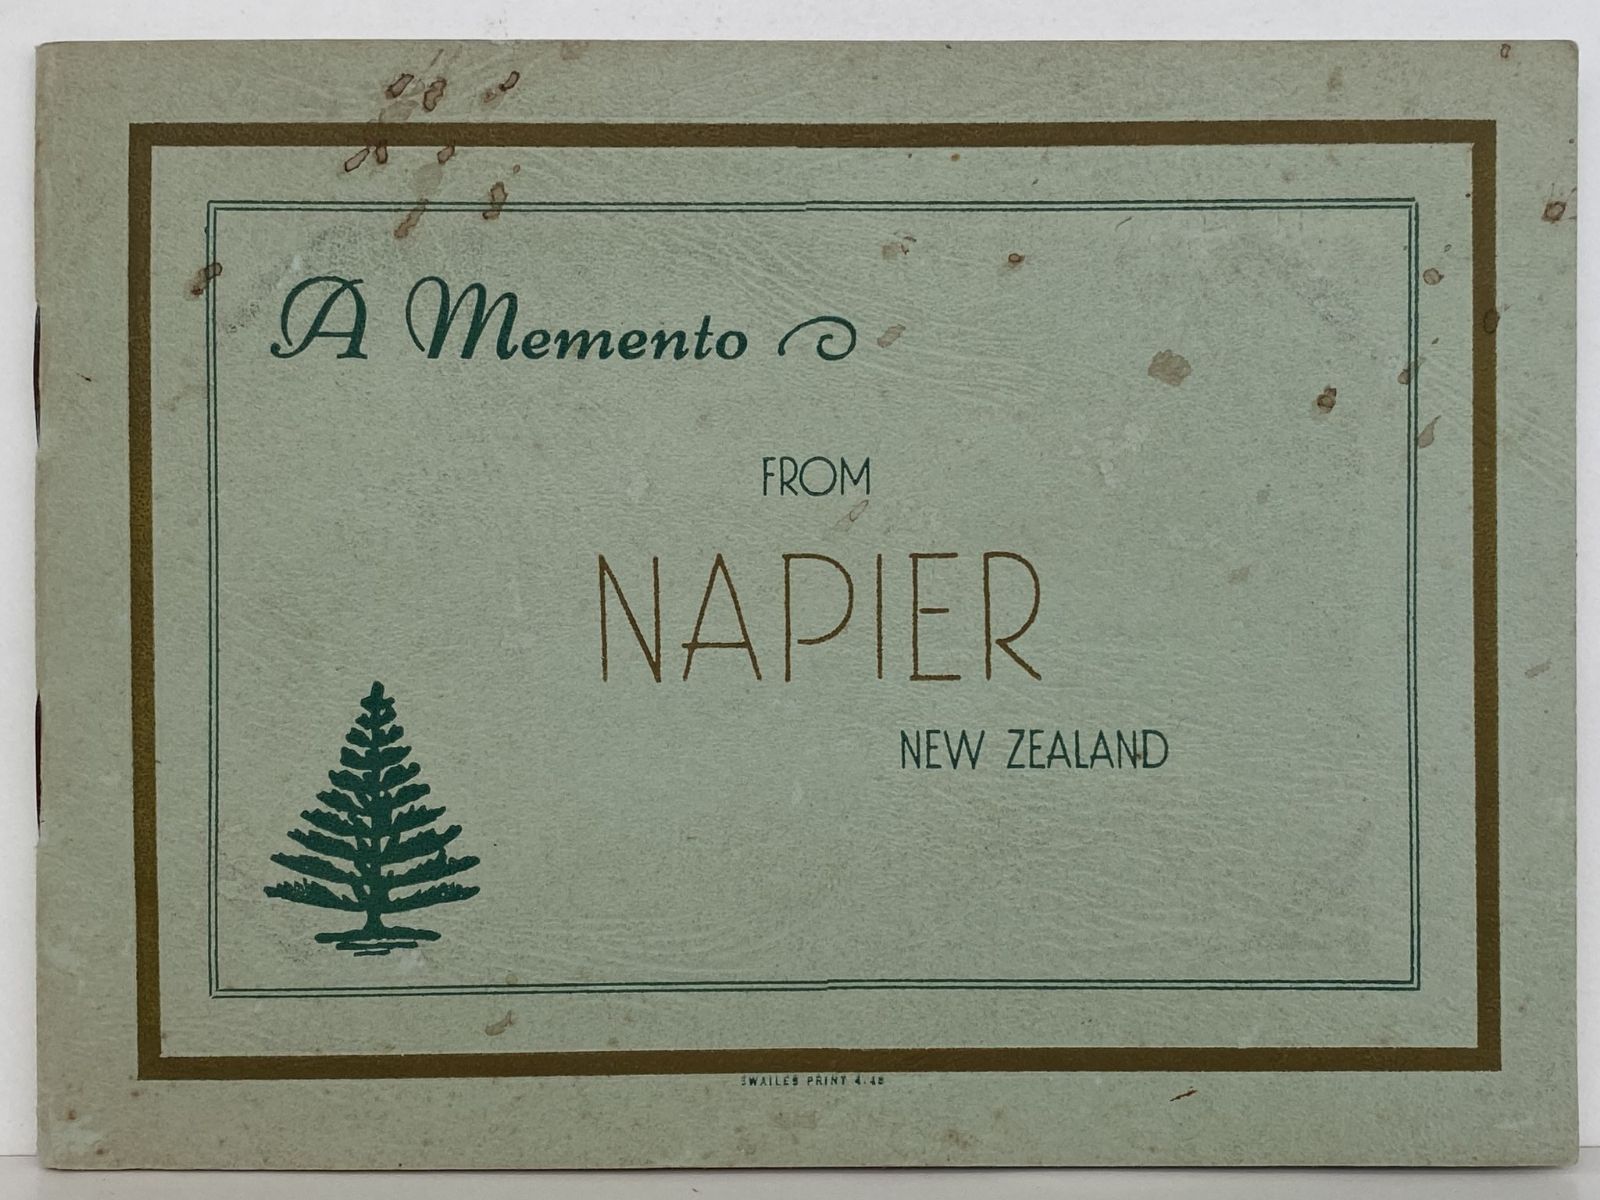 VINTAGE PHOTOS: A Memento from Napier, New Zealand